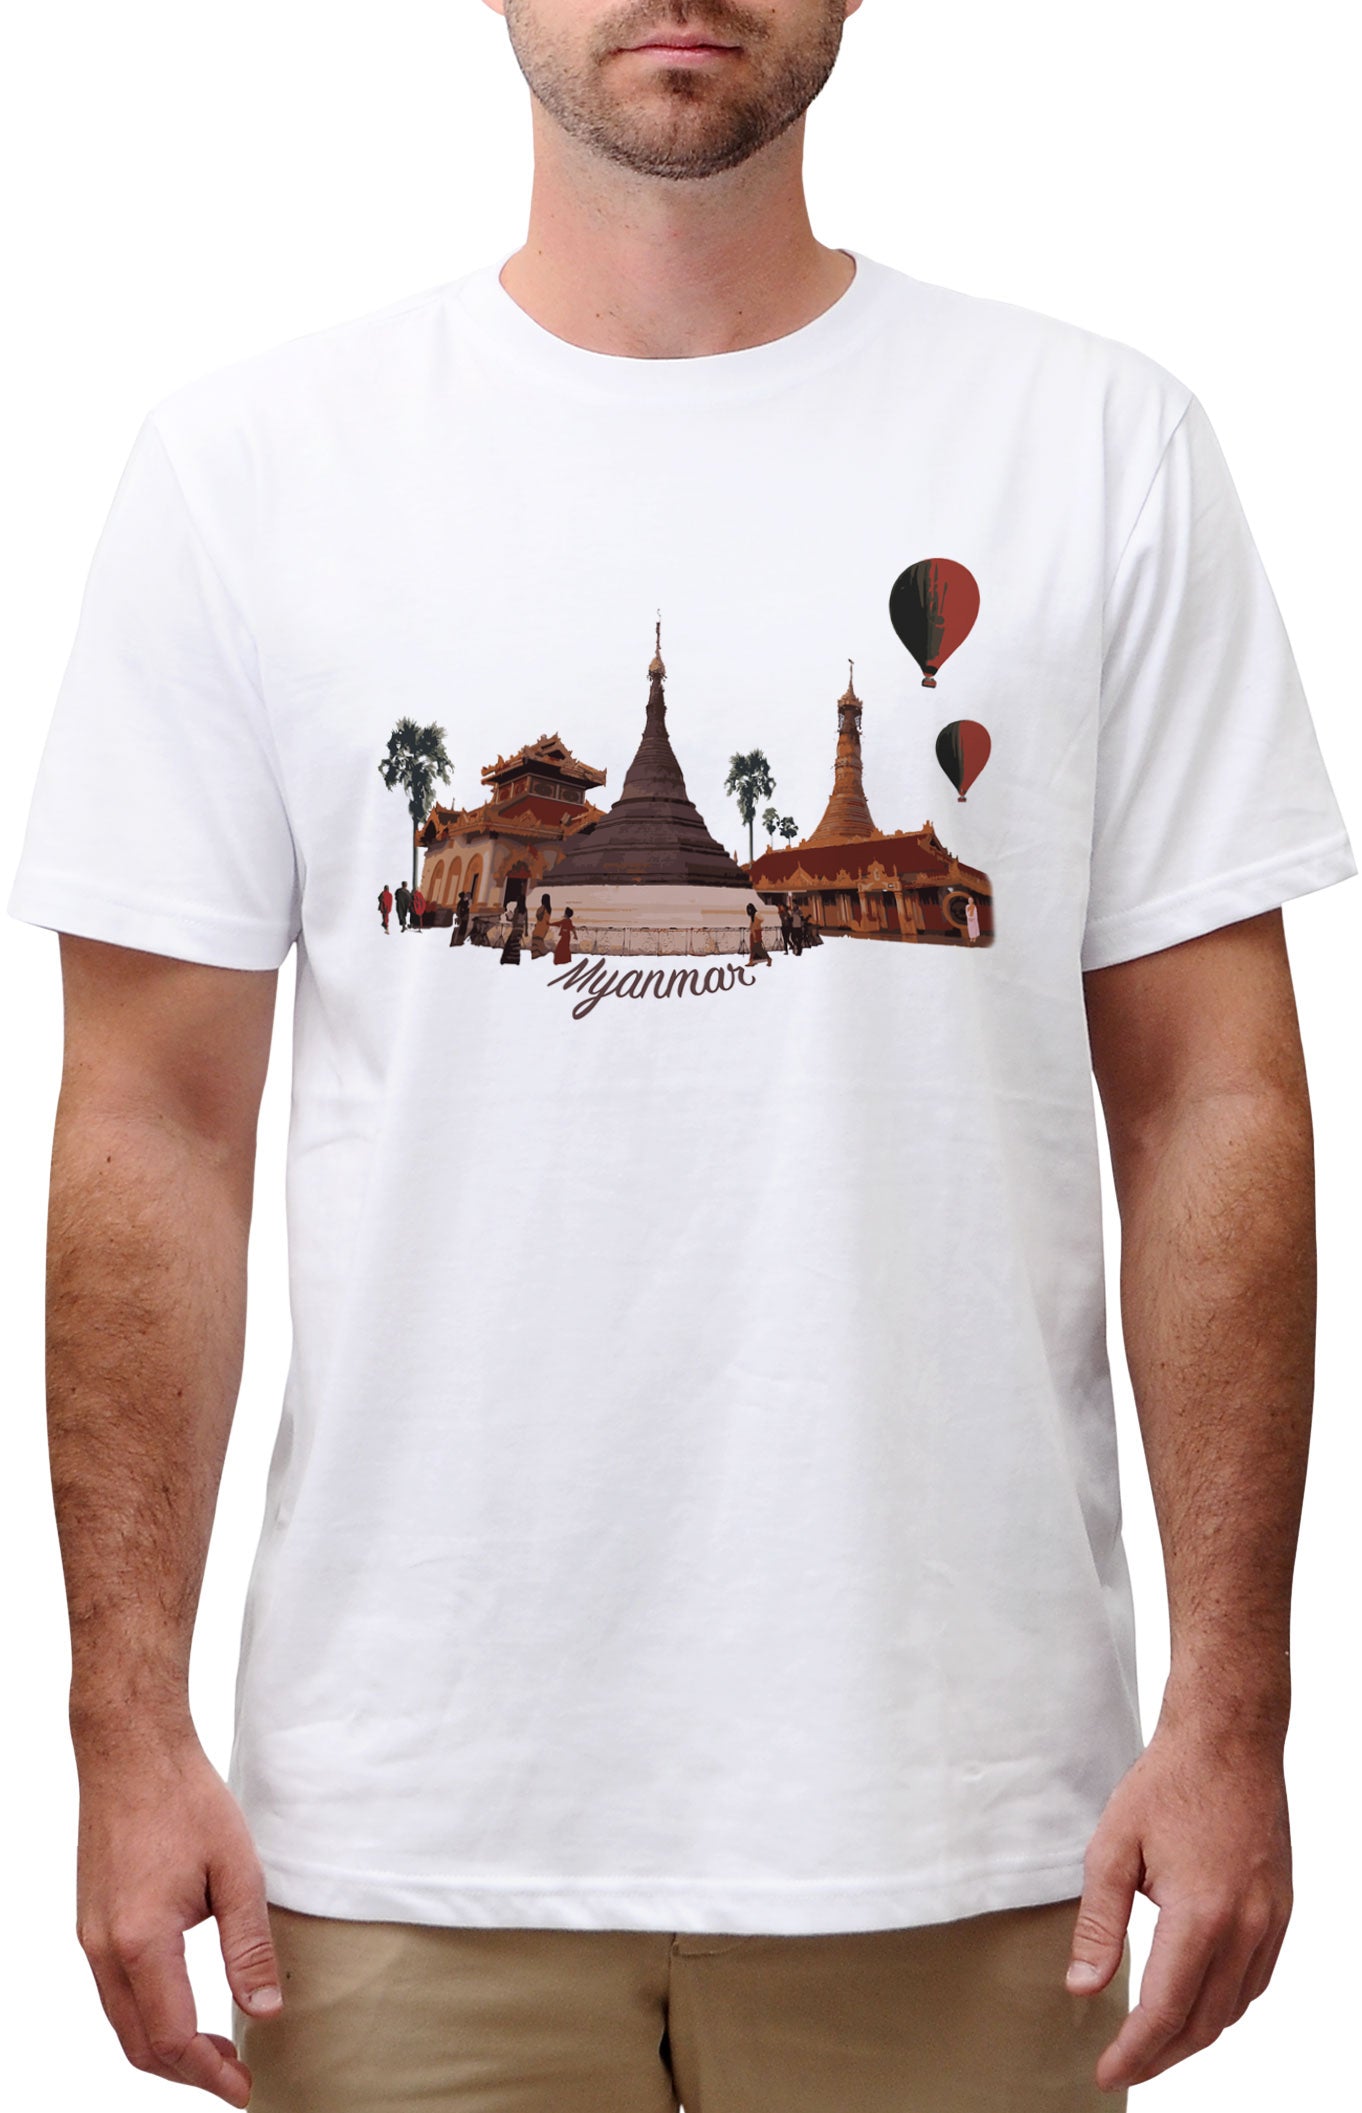 Myanmar's Culture Printed Cotton - Men's T-shirt Custom Round Neck All Sizes S-5xl - Burmese watercolor